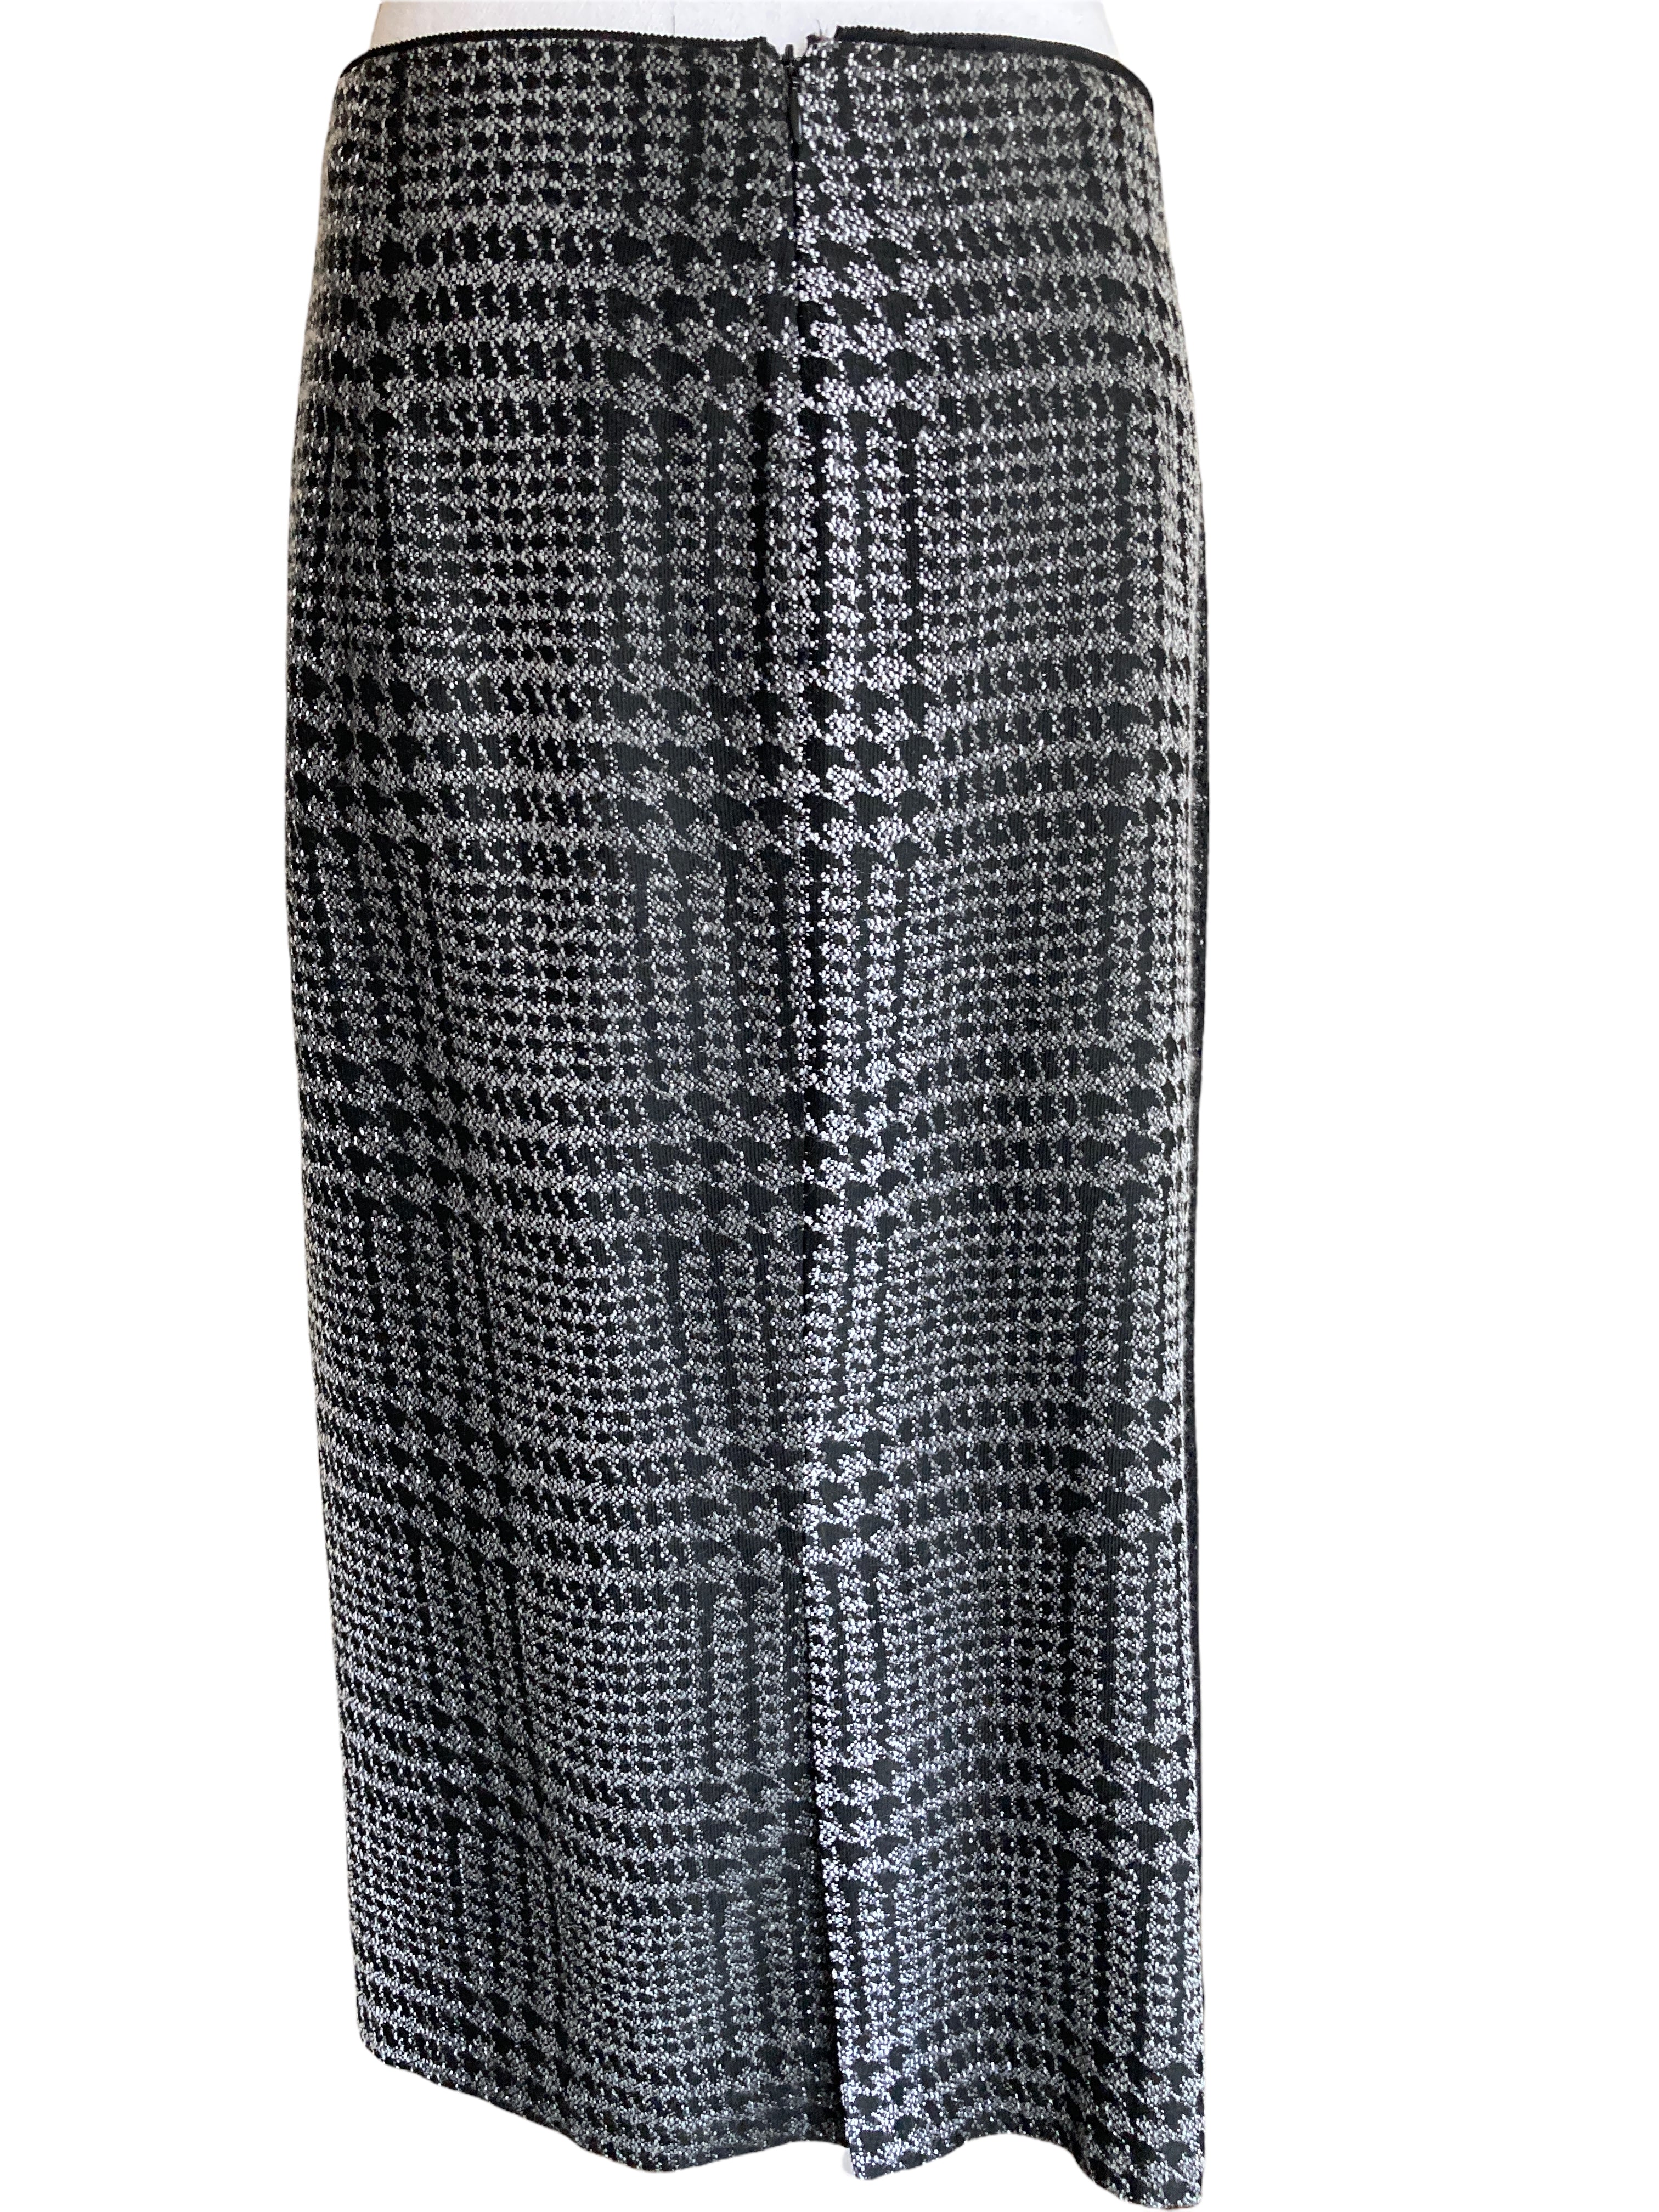 Lafayette 148 Charcoal Plaid Skirt, 10